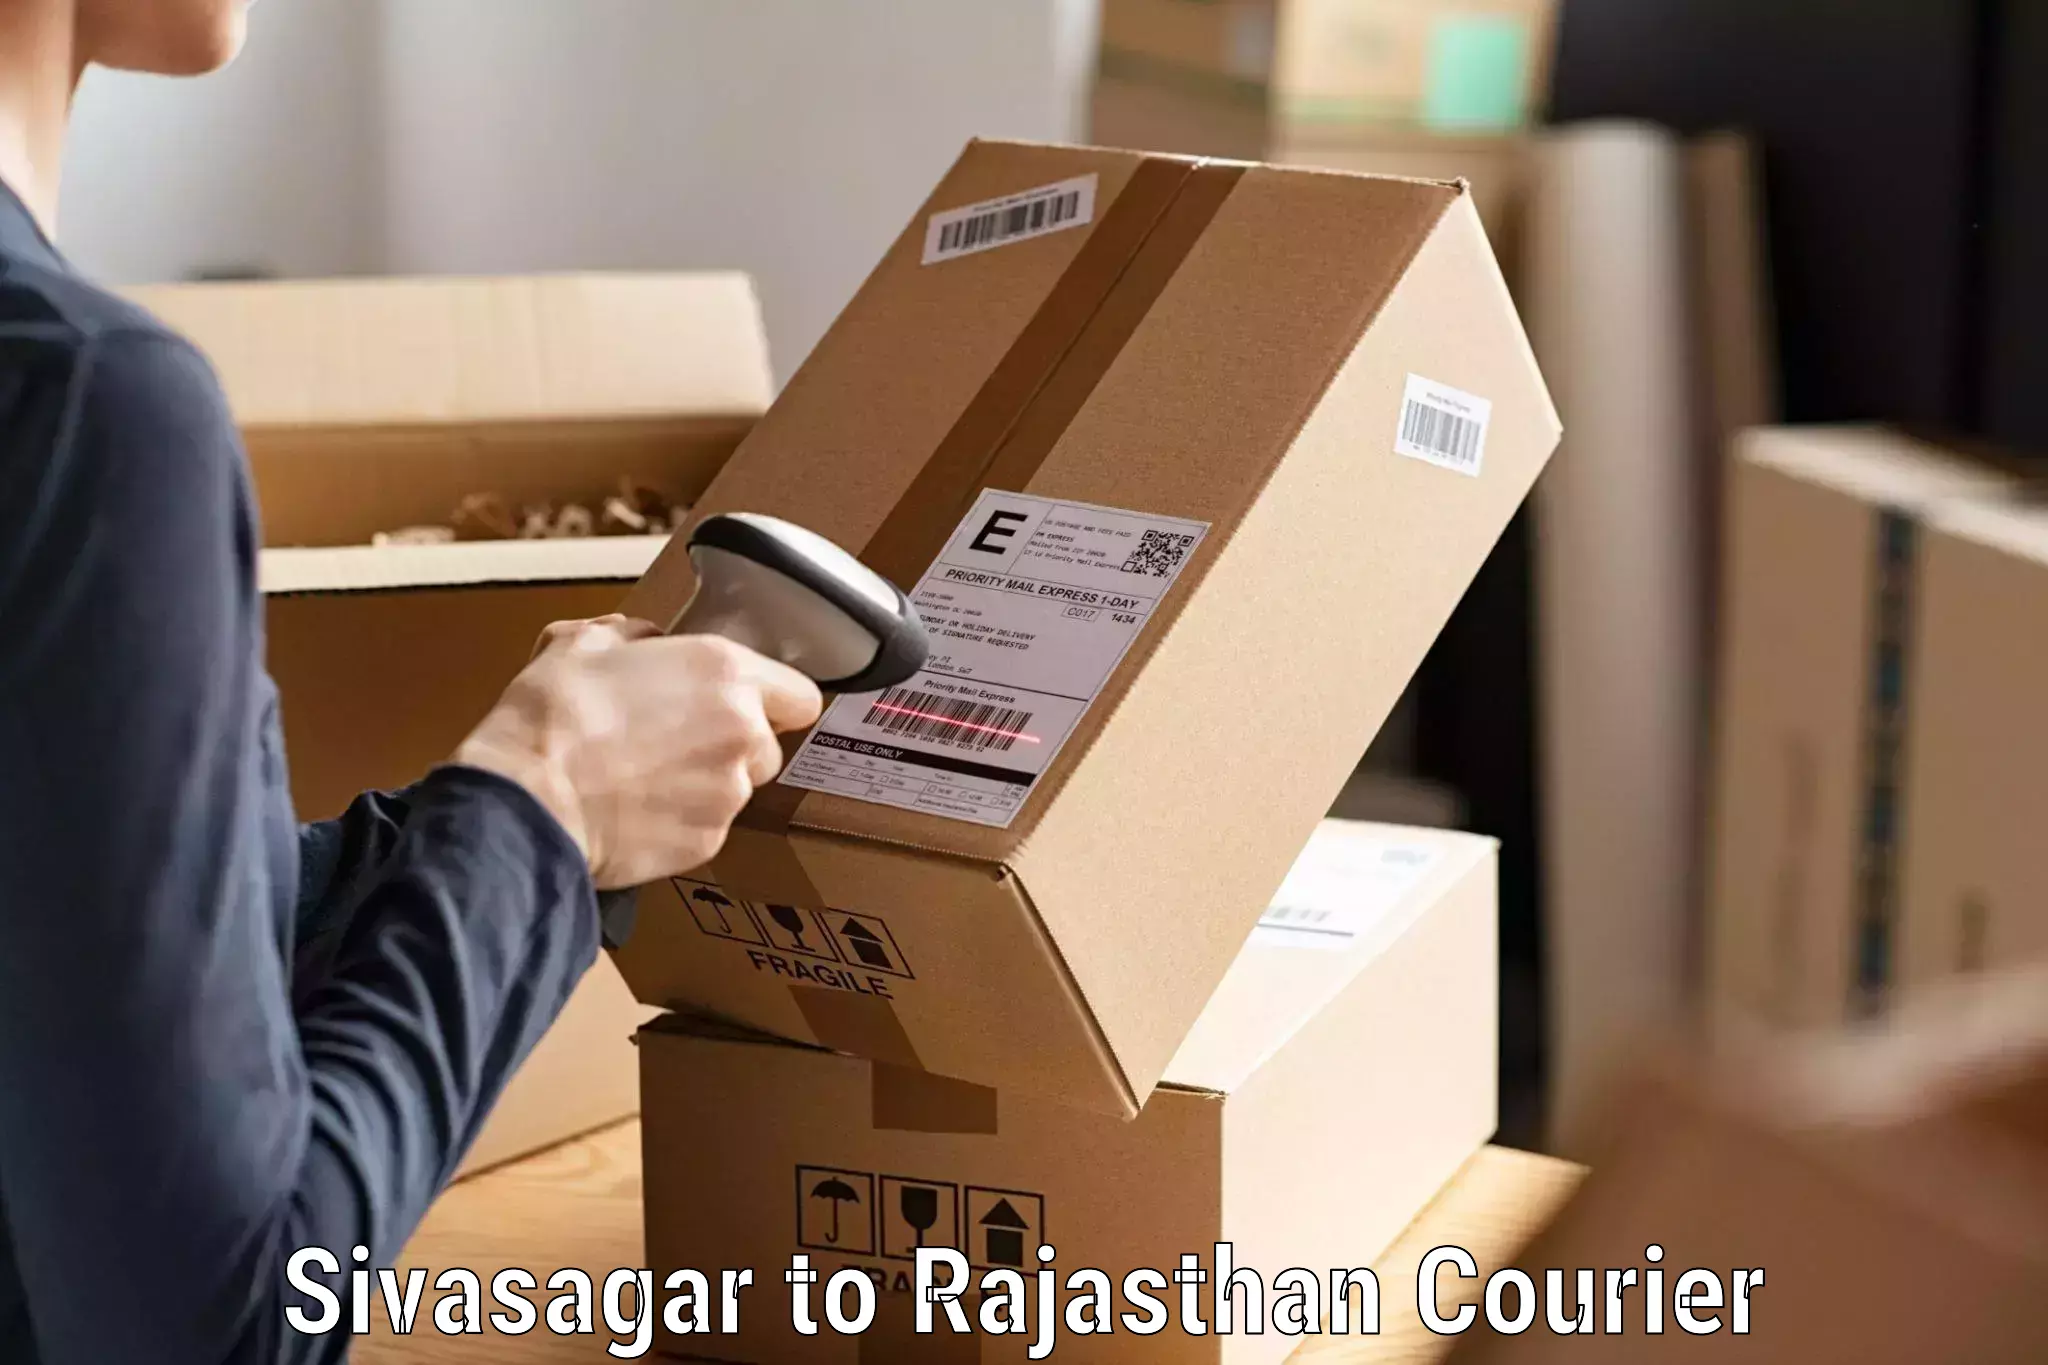 End-to-end delivery Sivasagar to Kishangarh